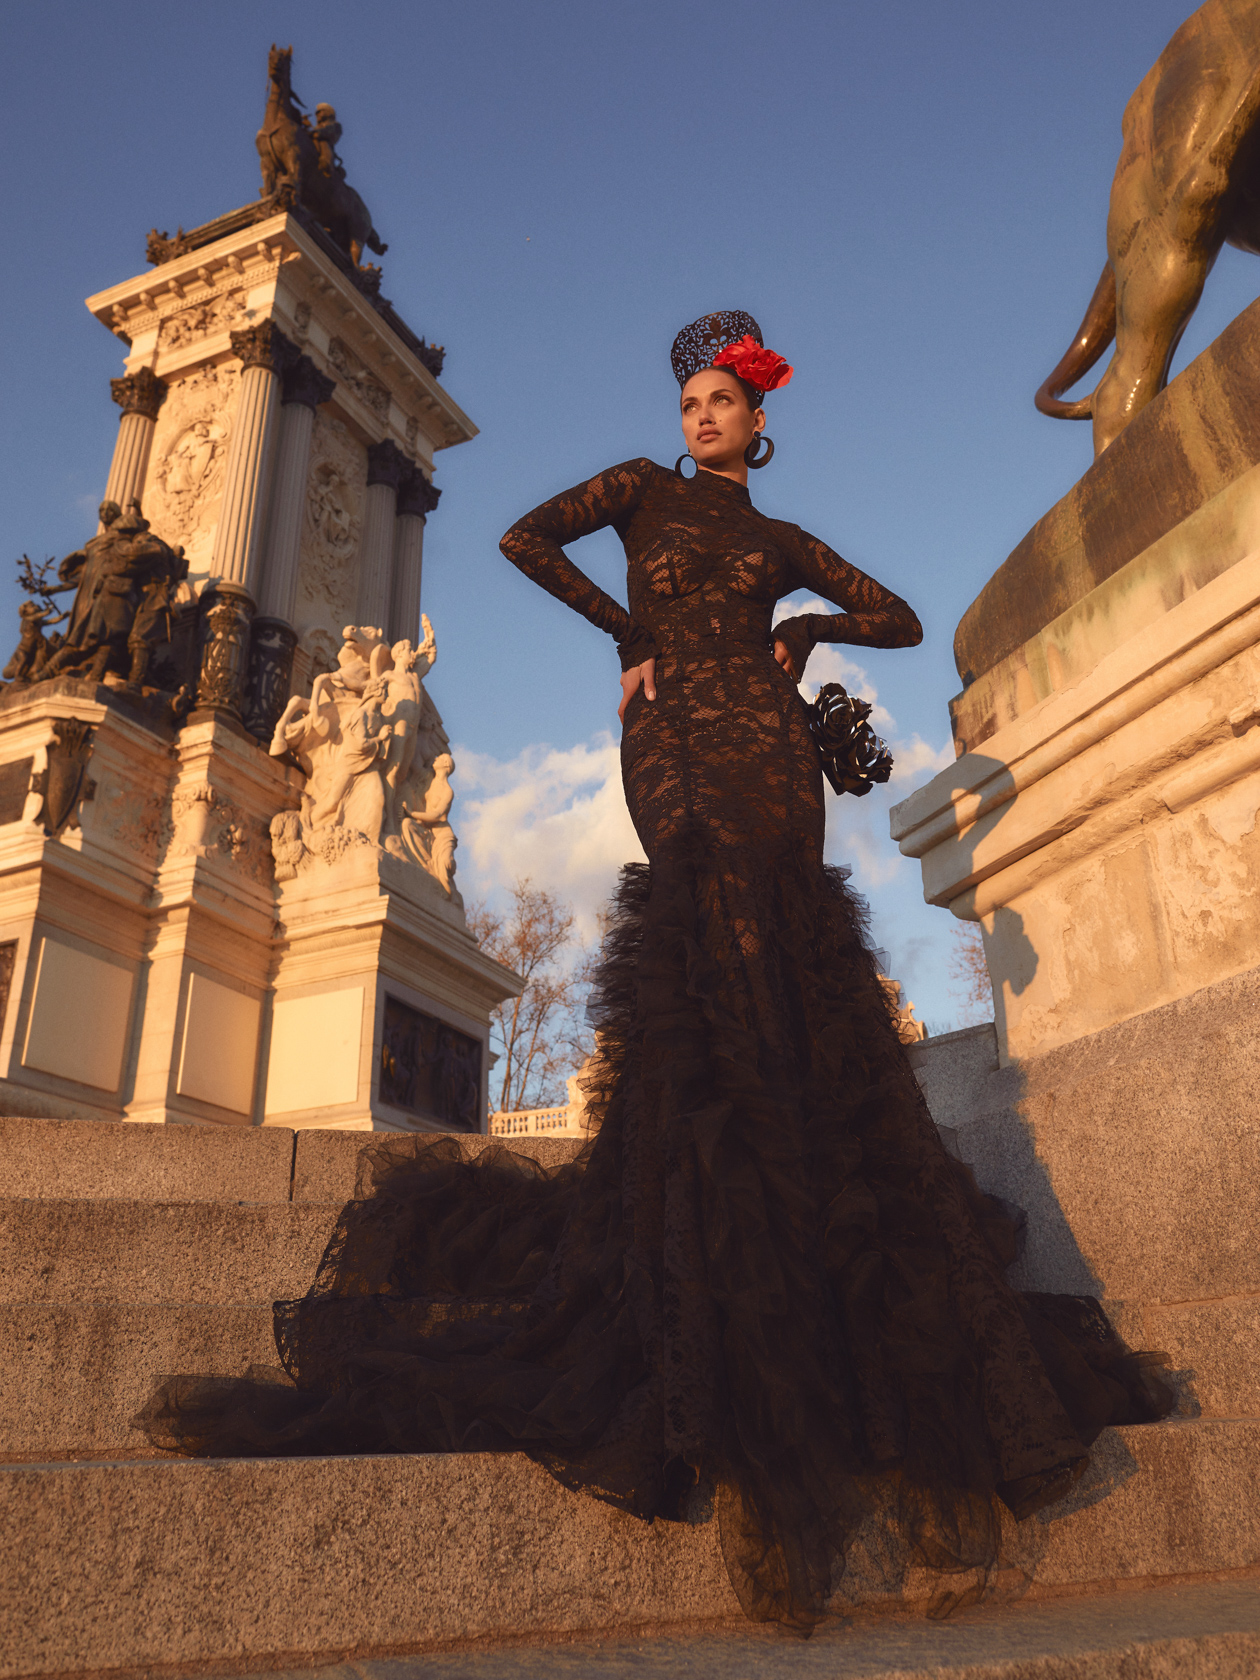 2023 Is the Year of Black Wedding Dresses - Galia Lahav